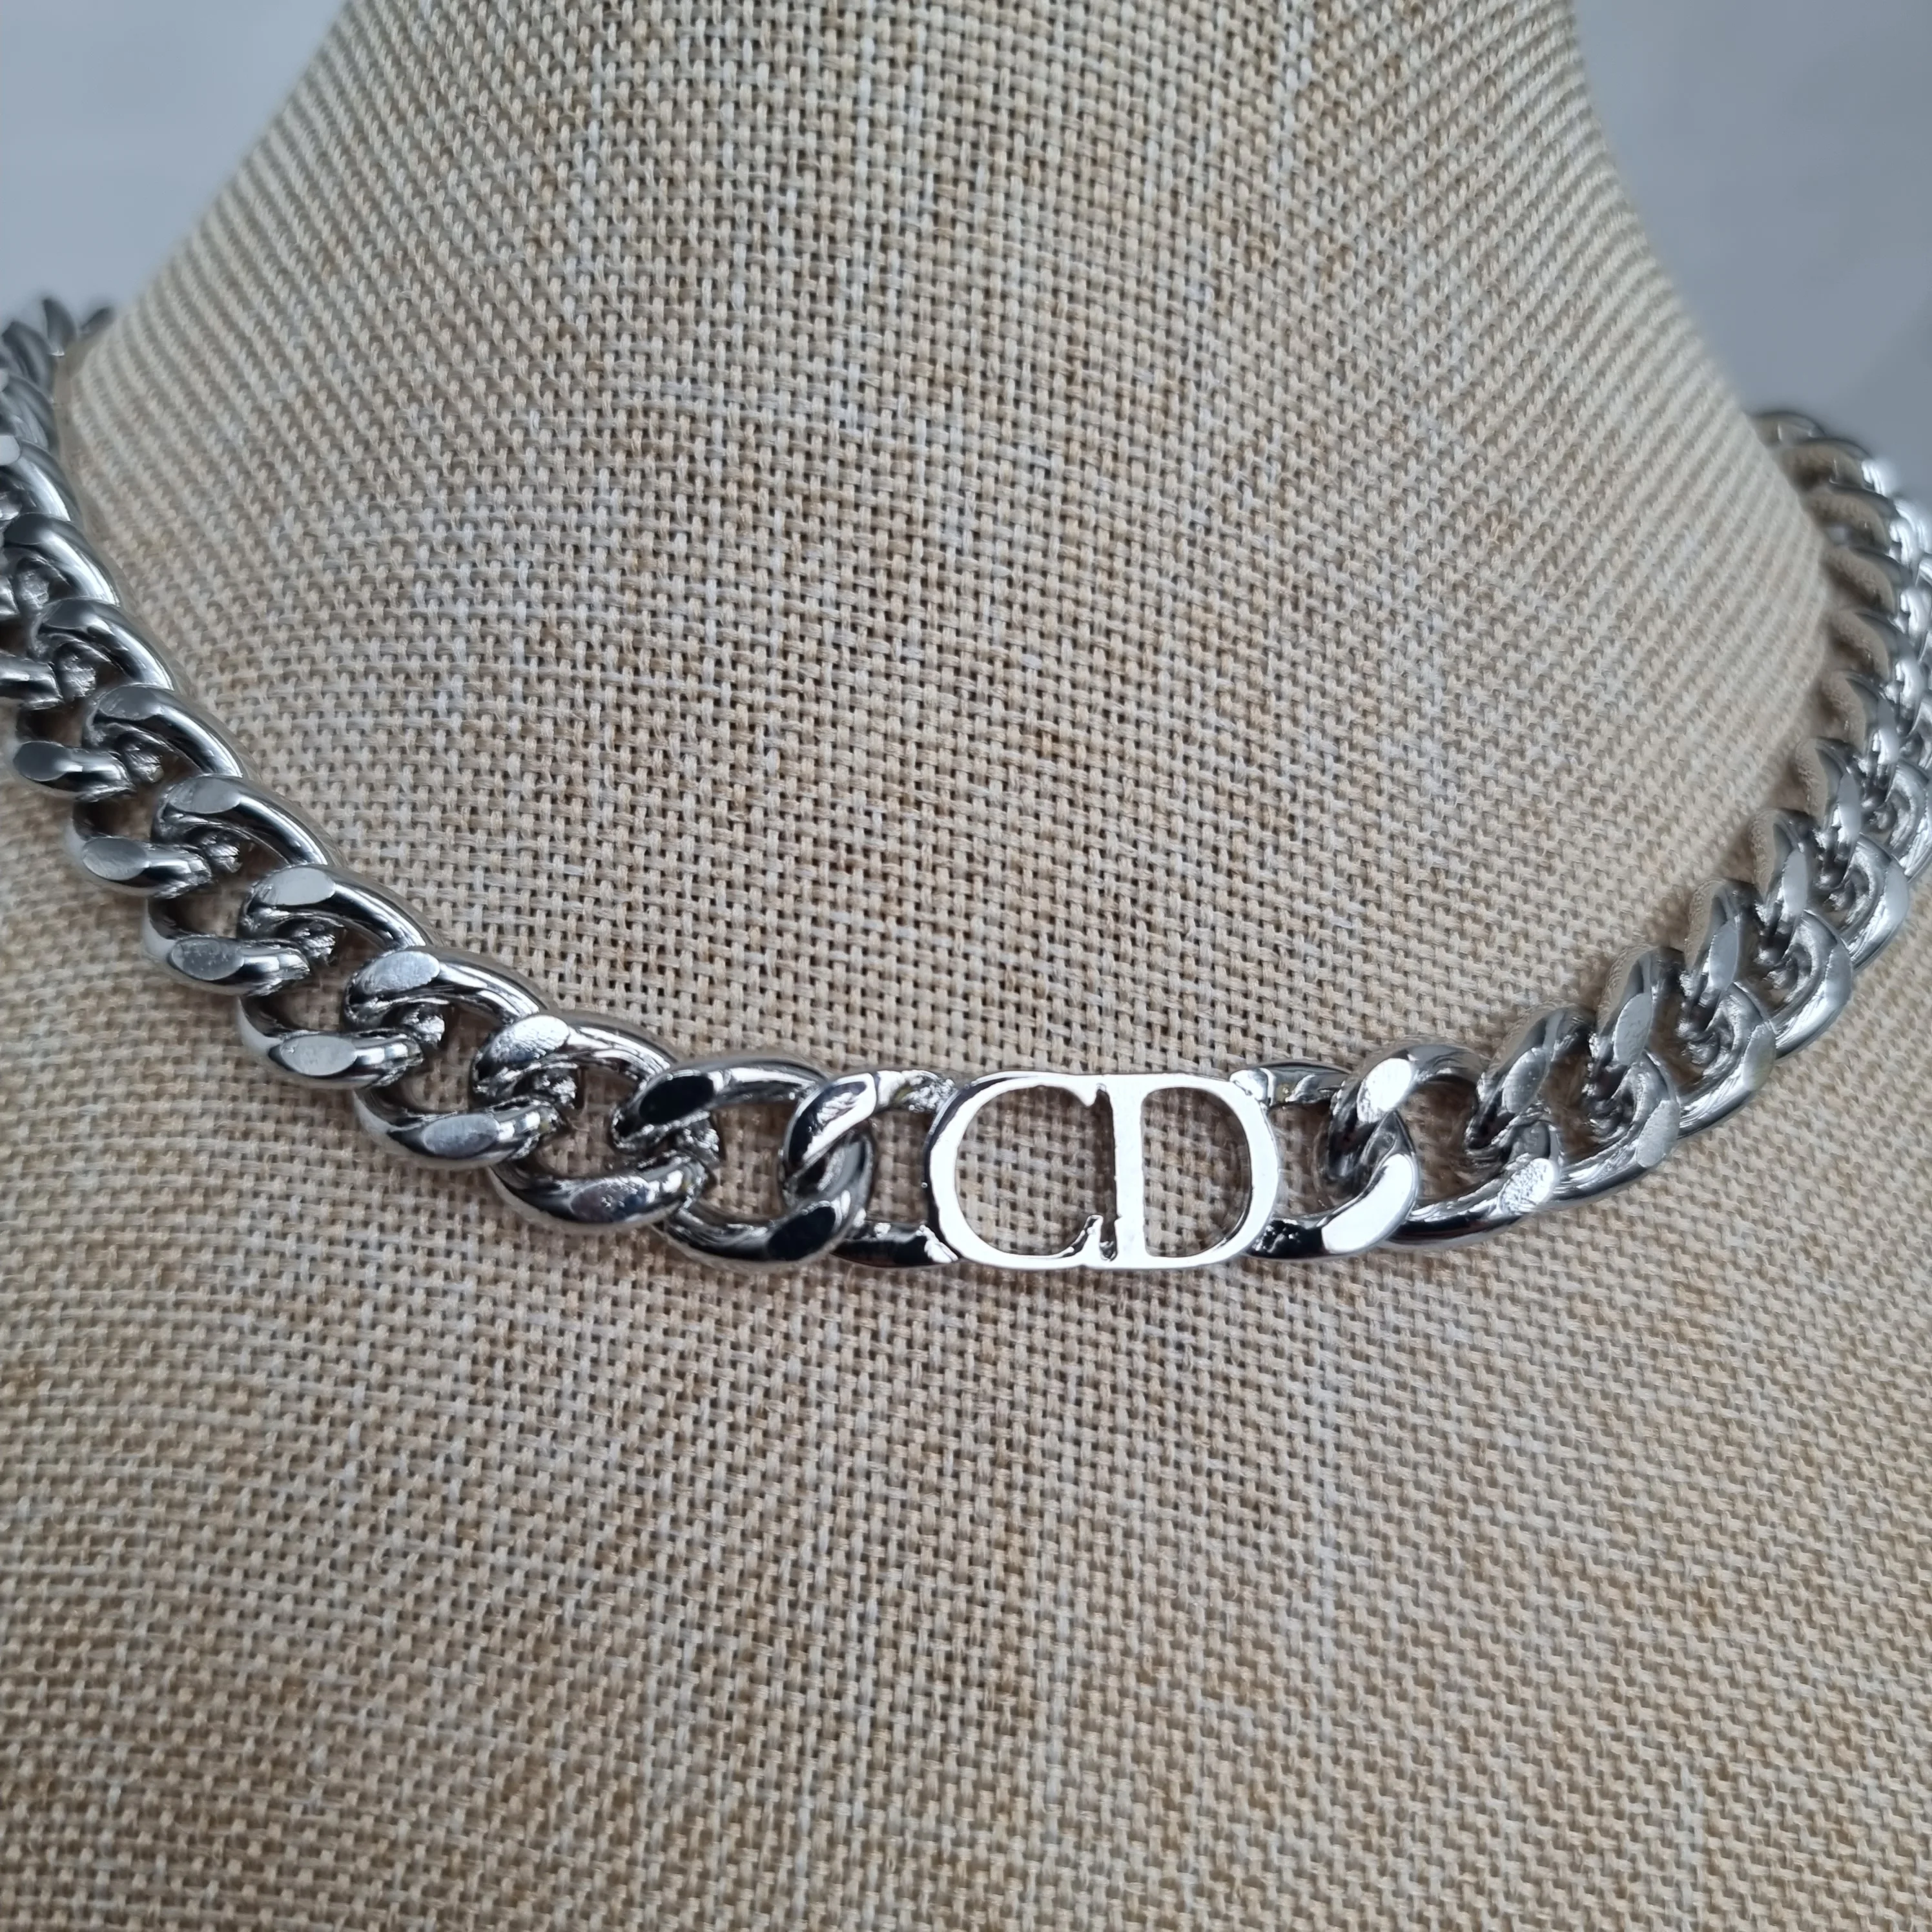 Round neck chain CD choker neck 40 cm stylish necklace fashion jewelry